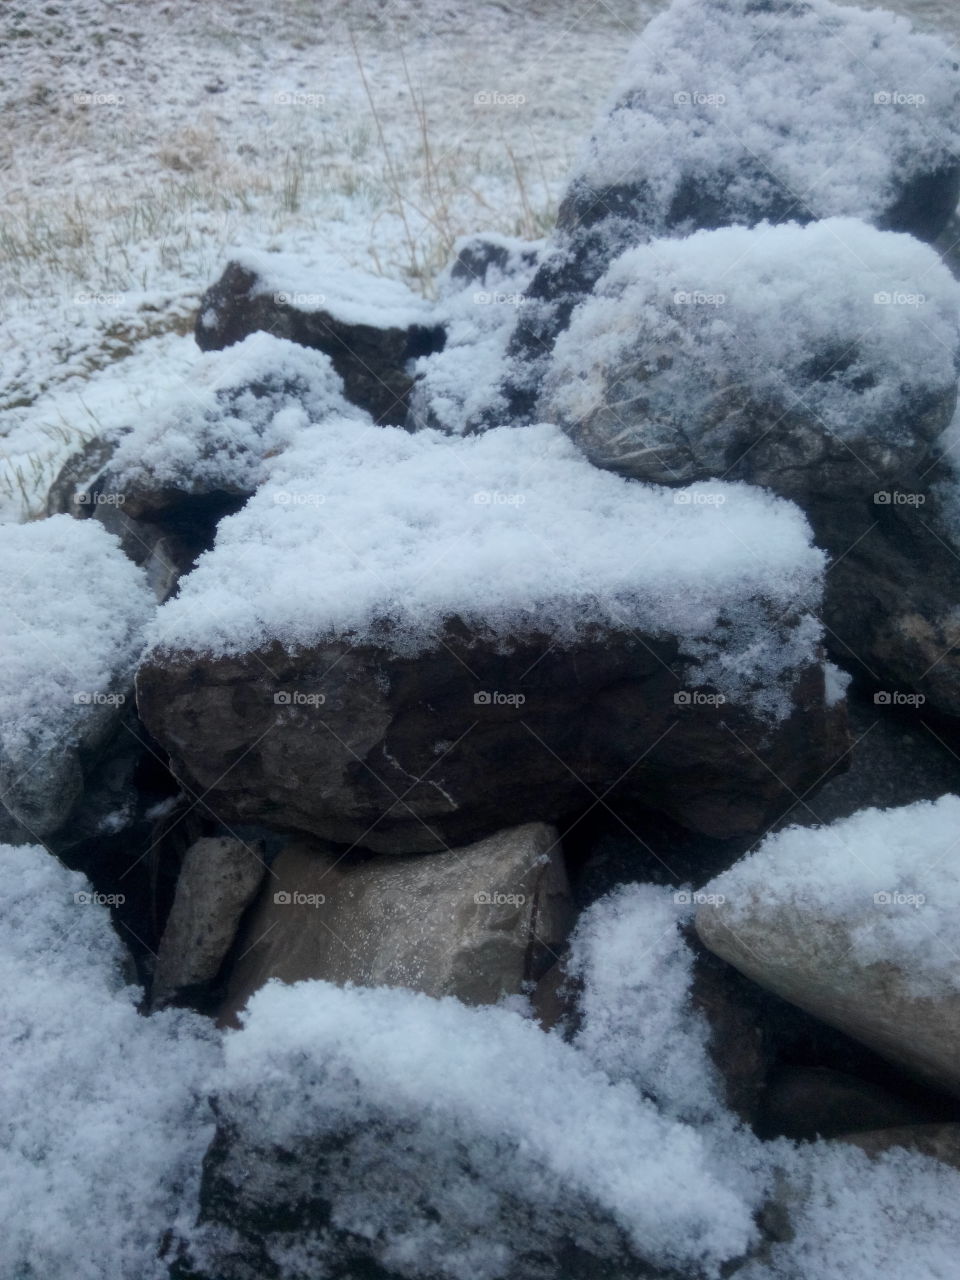 Snowy rocks. Grey rocks with gentle cover of snow